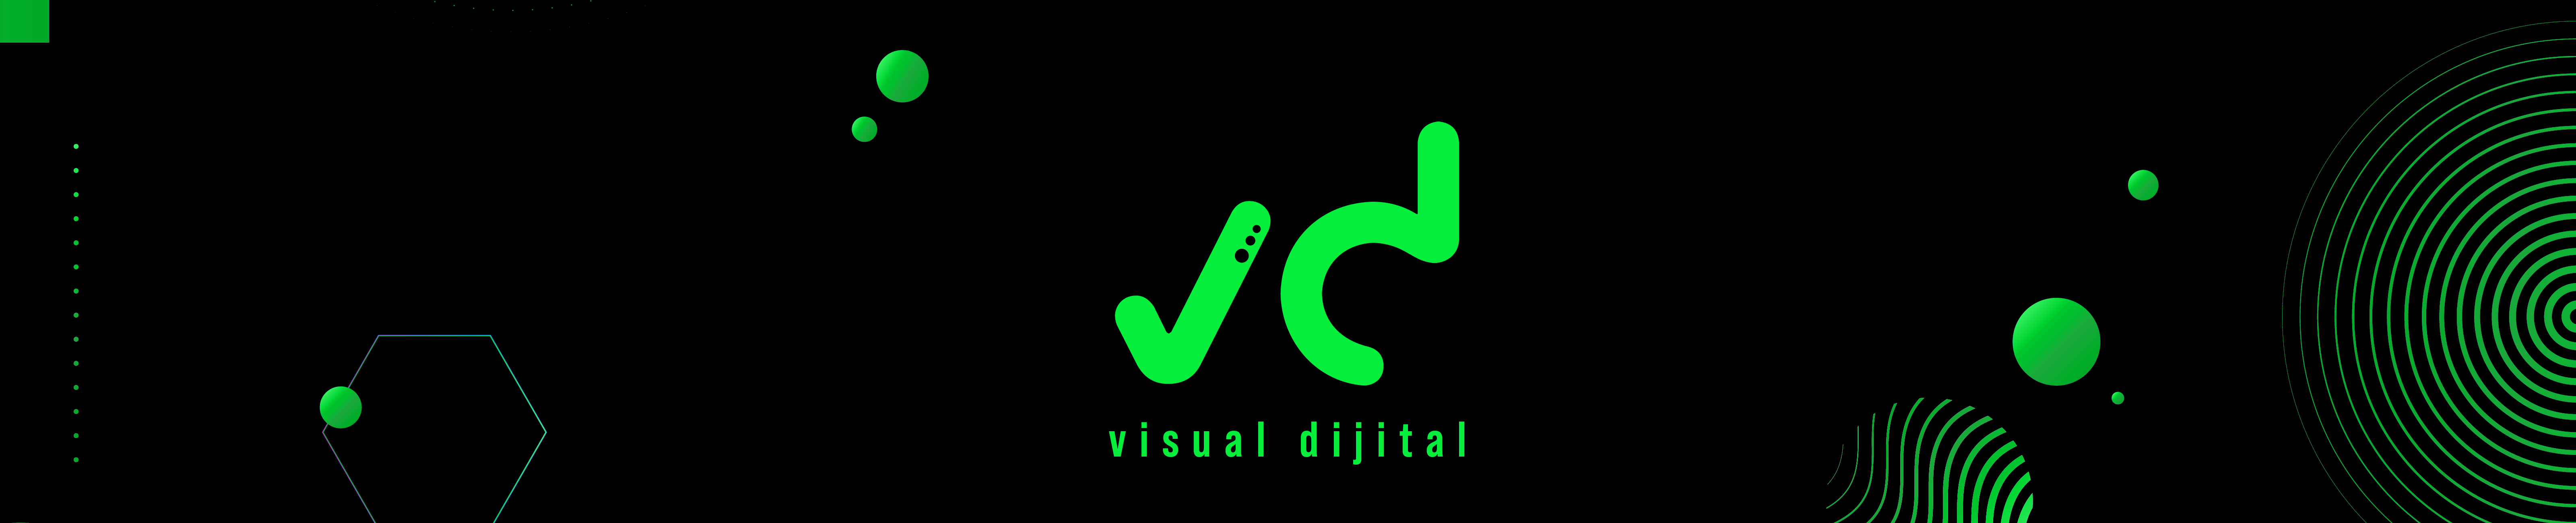 Visual Dijital's profile banner